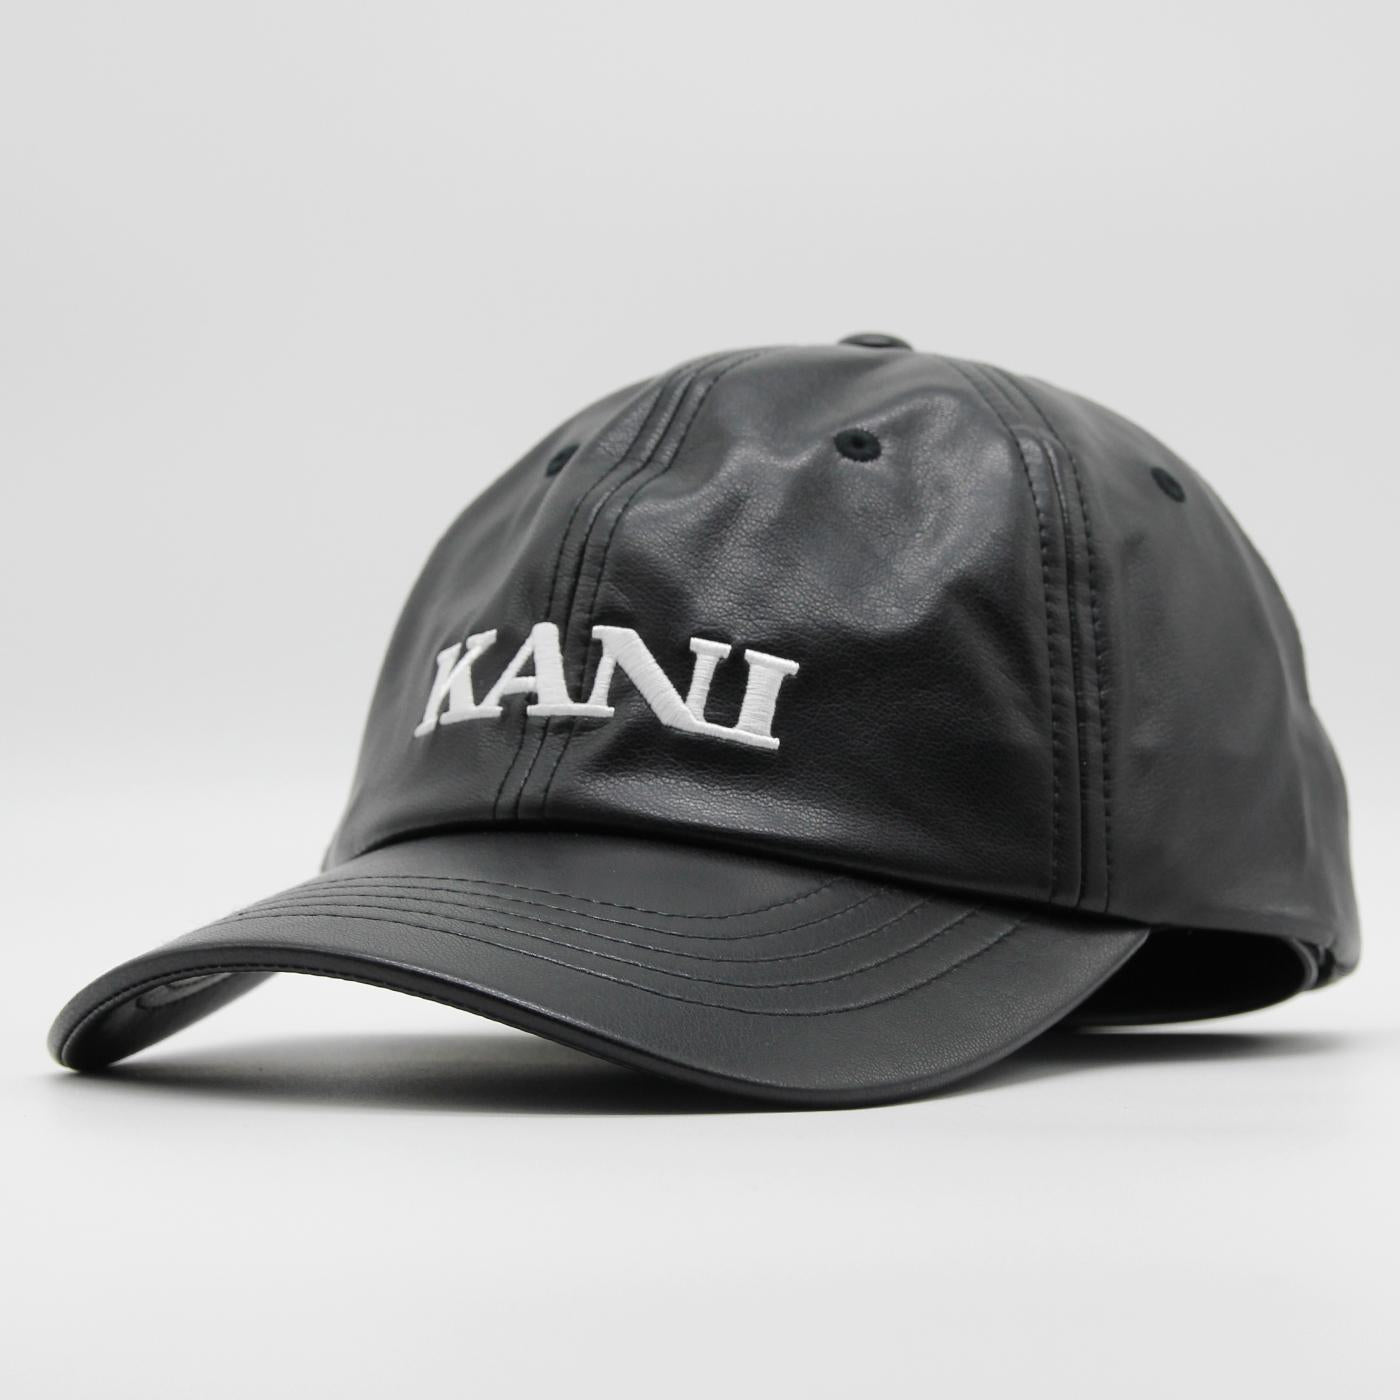 Karl Kani Retro Fake Leather cap black - Shop-Tetuan